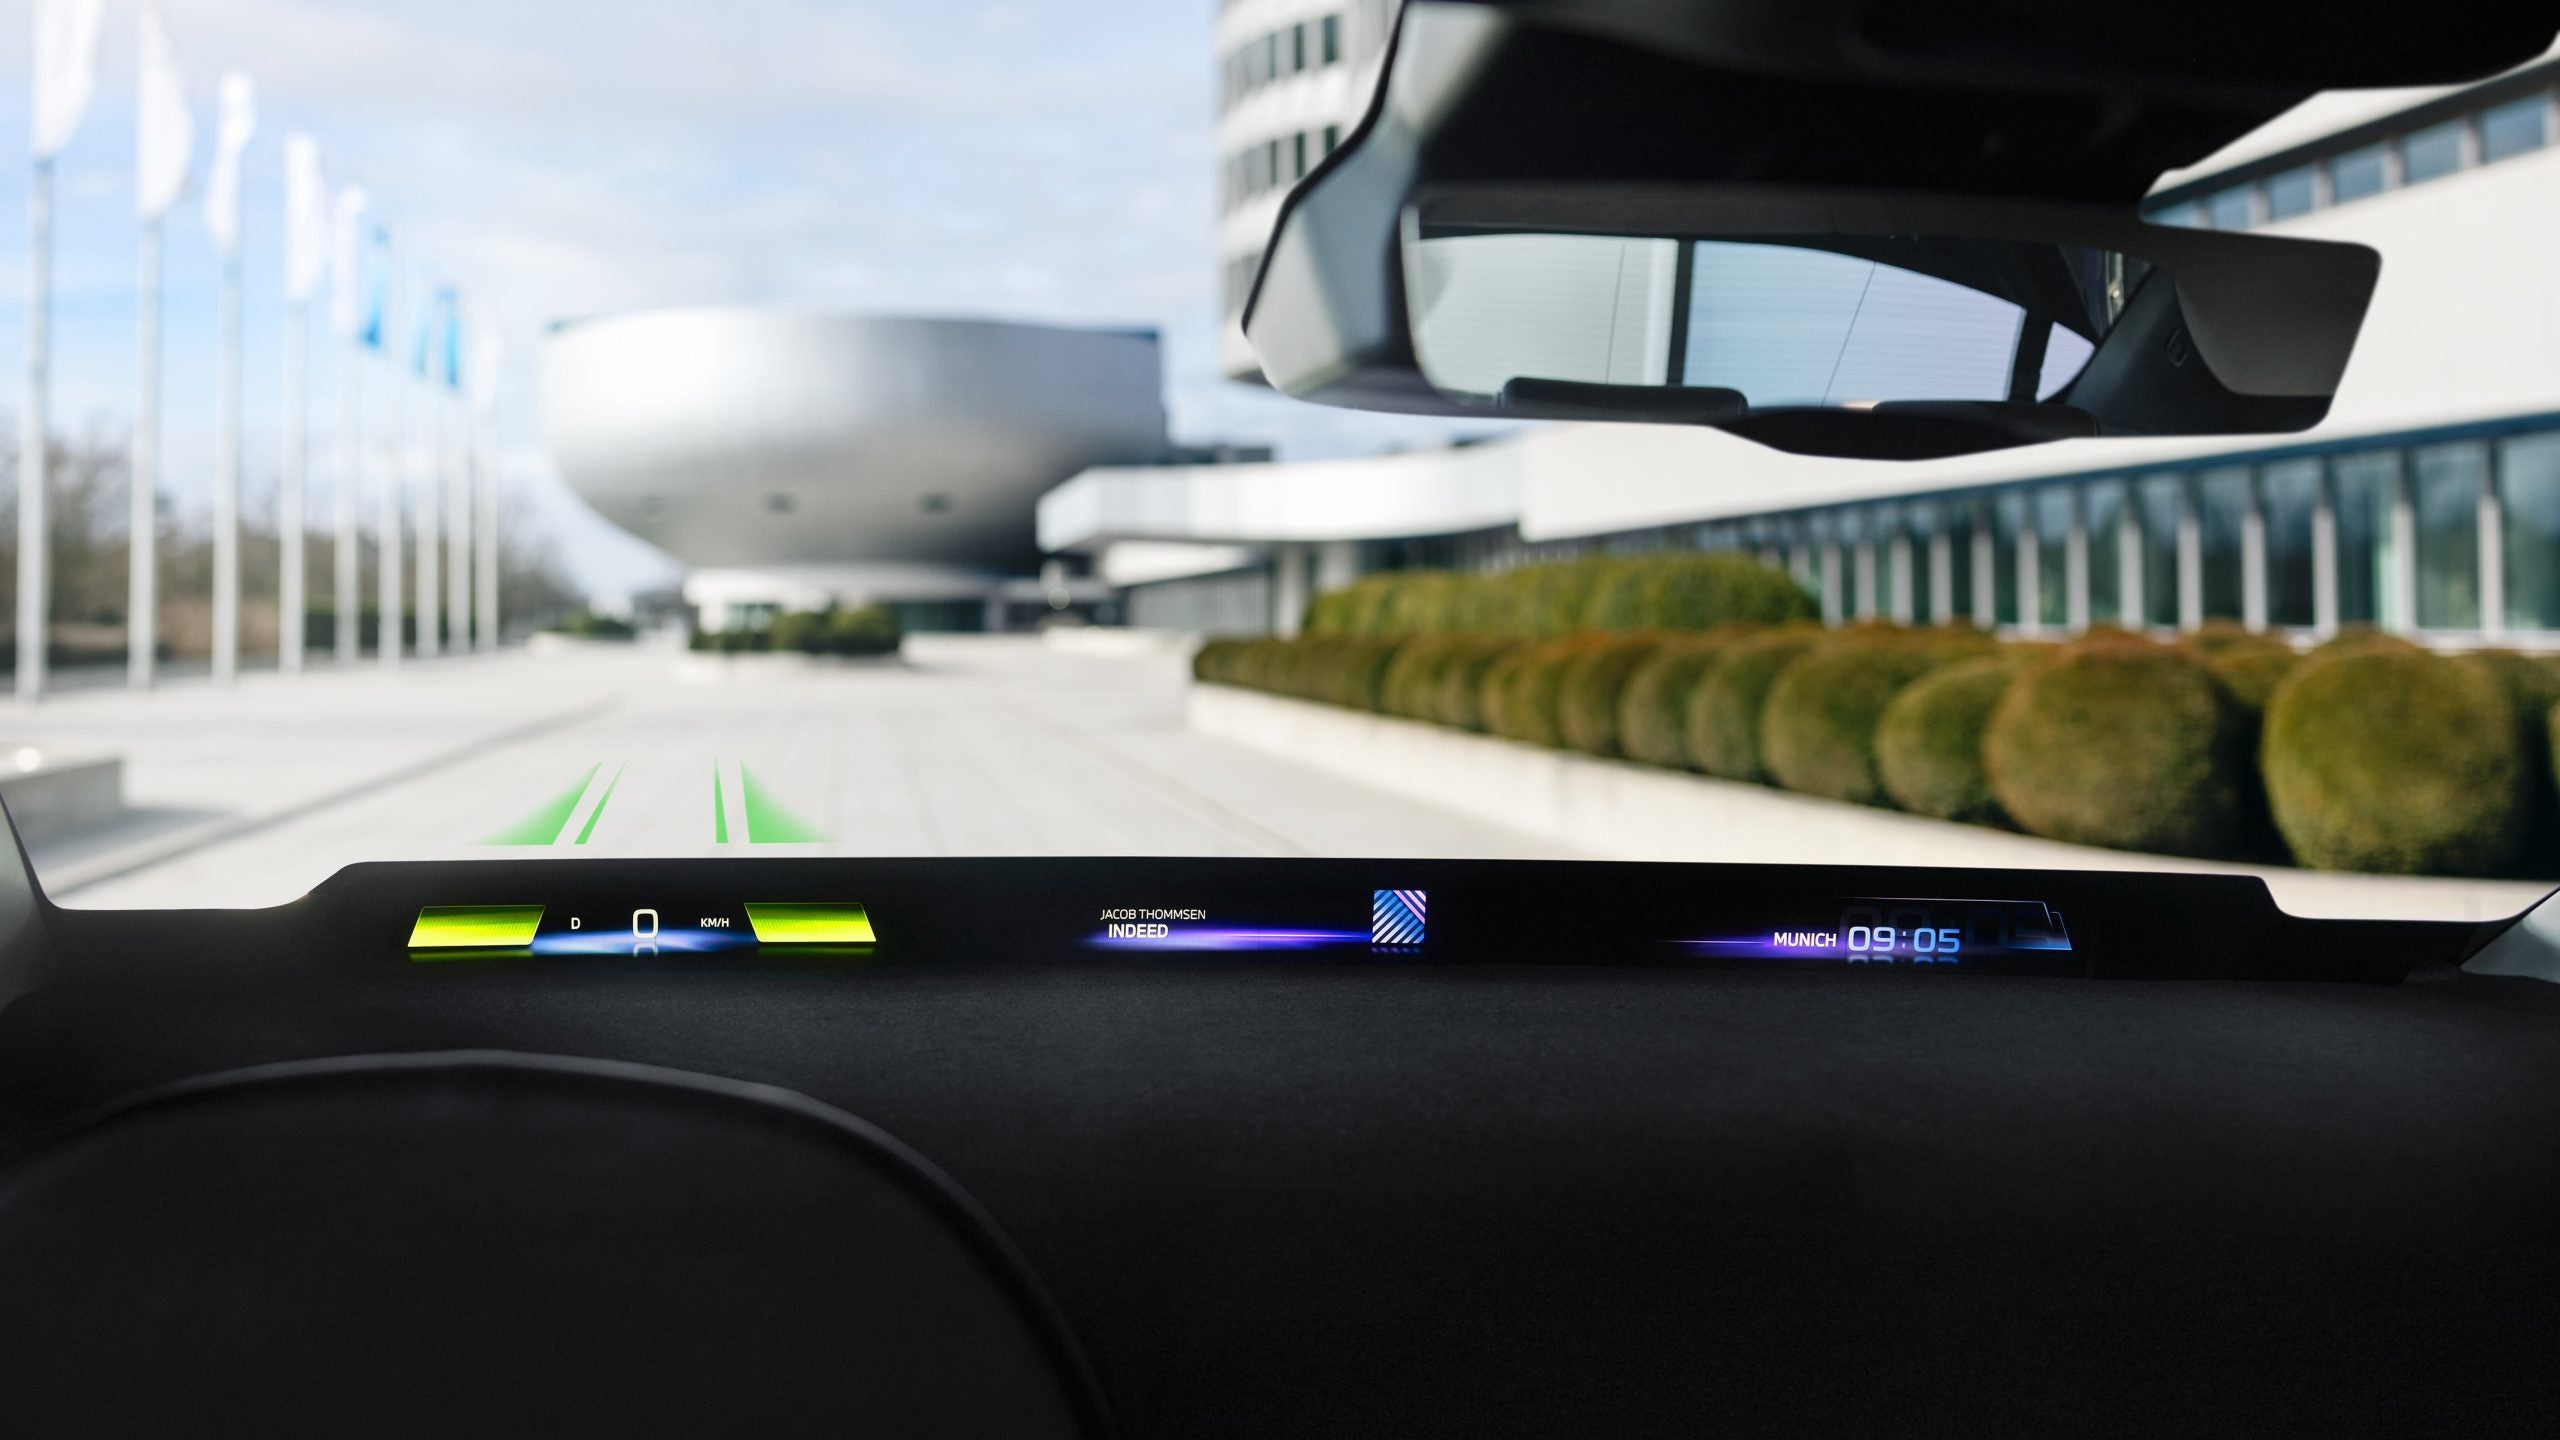 BMW Neue Klasse will have Panoramic Vision HUD - Just Auto